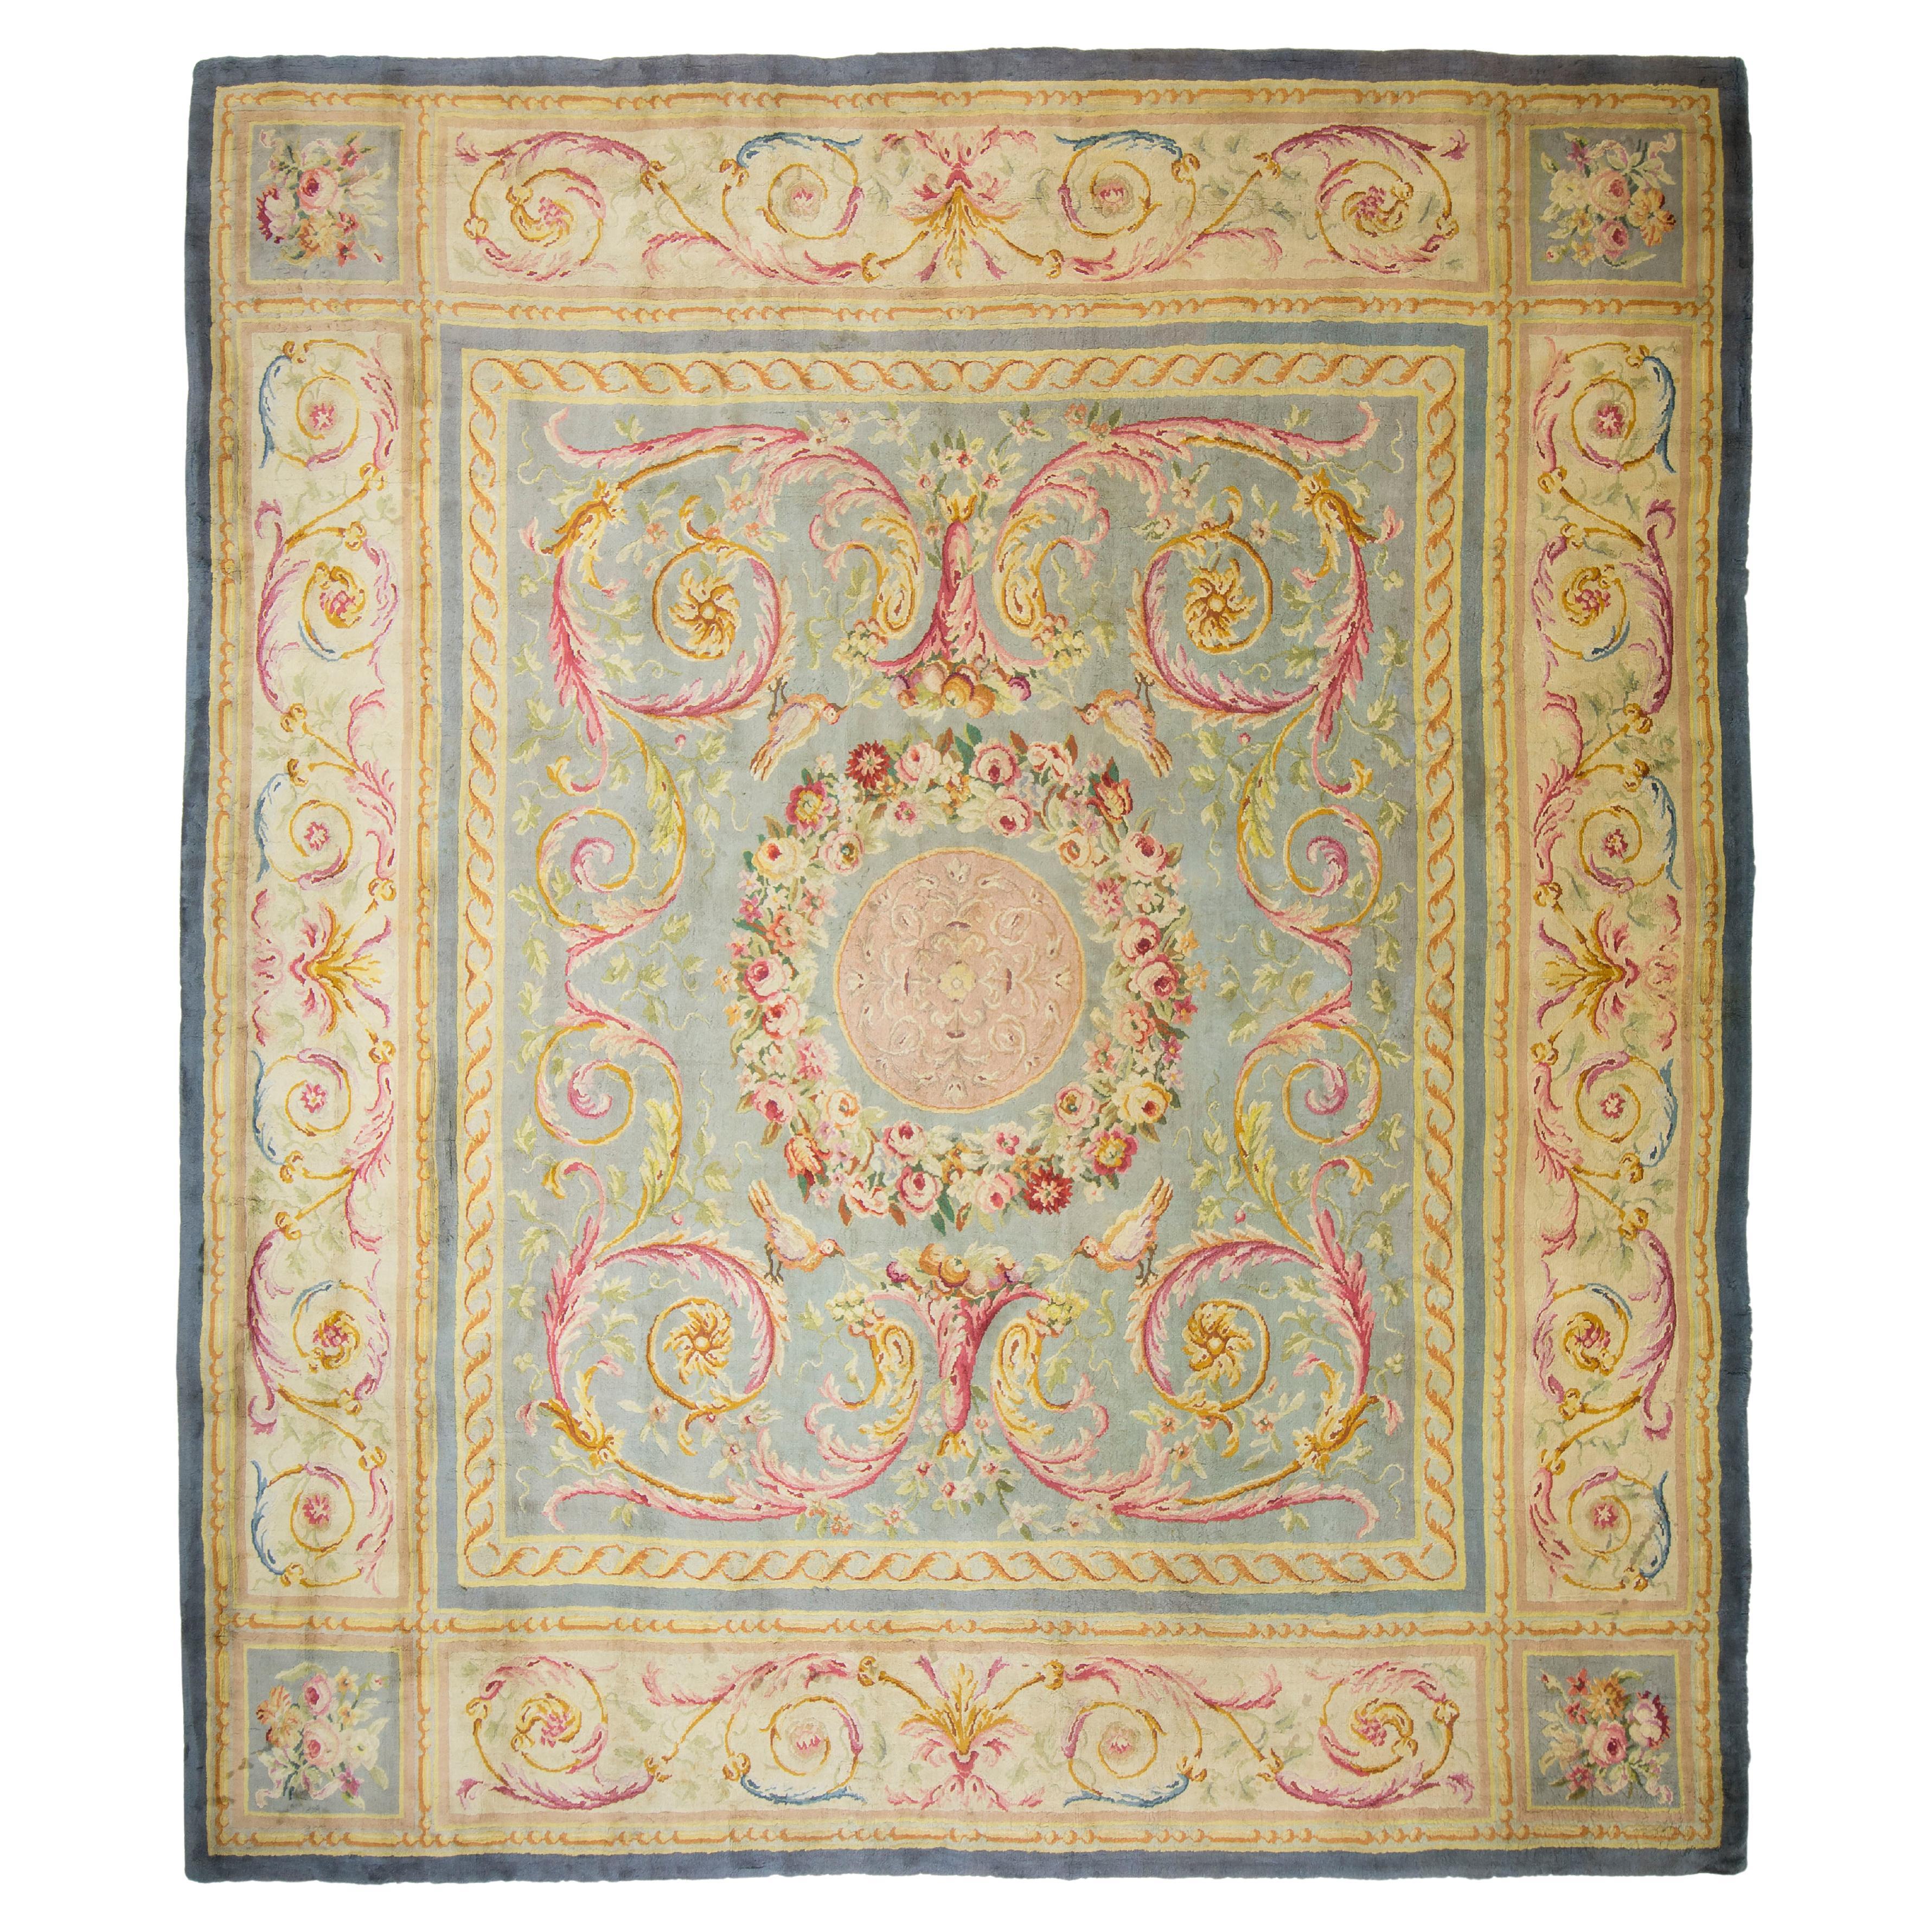 Antique French Savonnerie Carpet